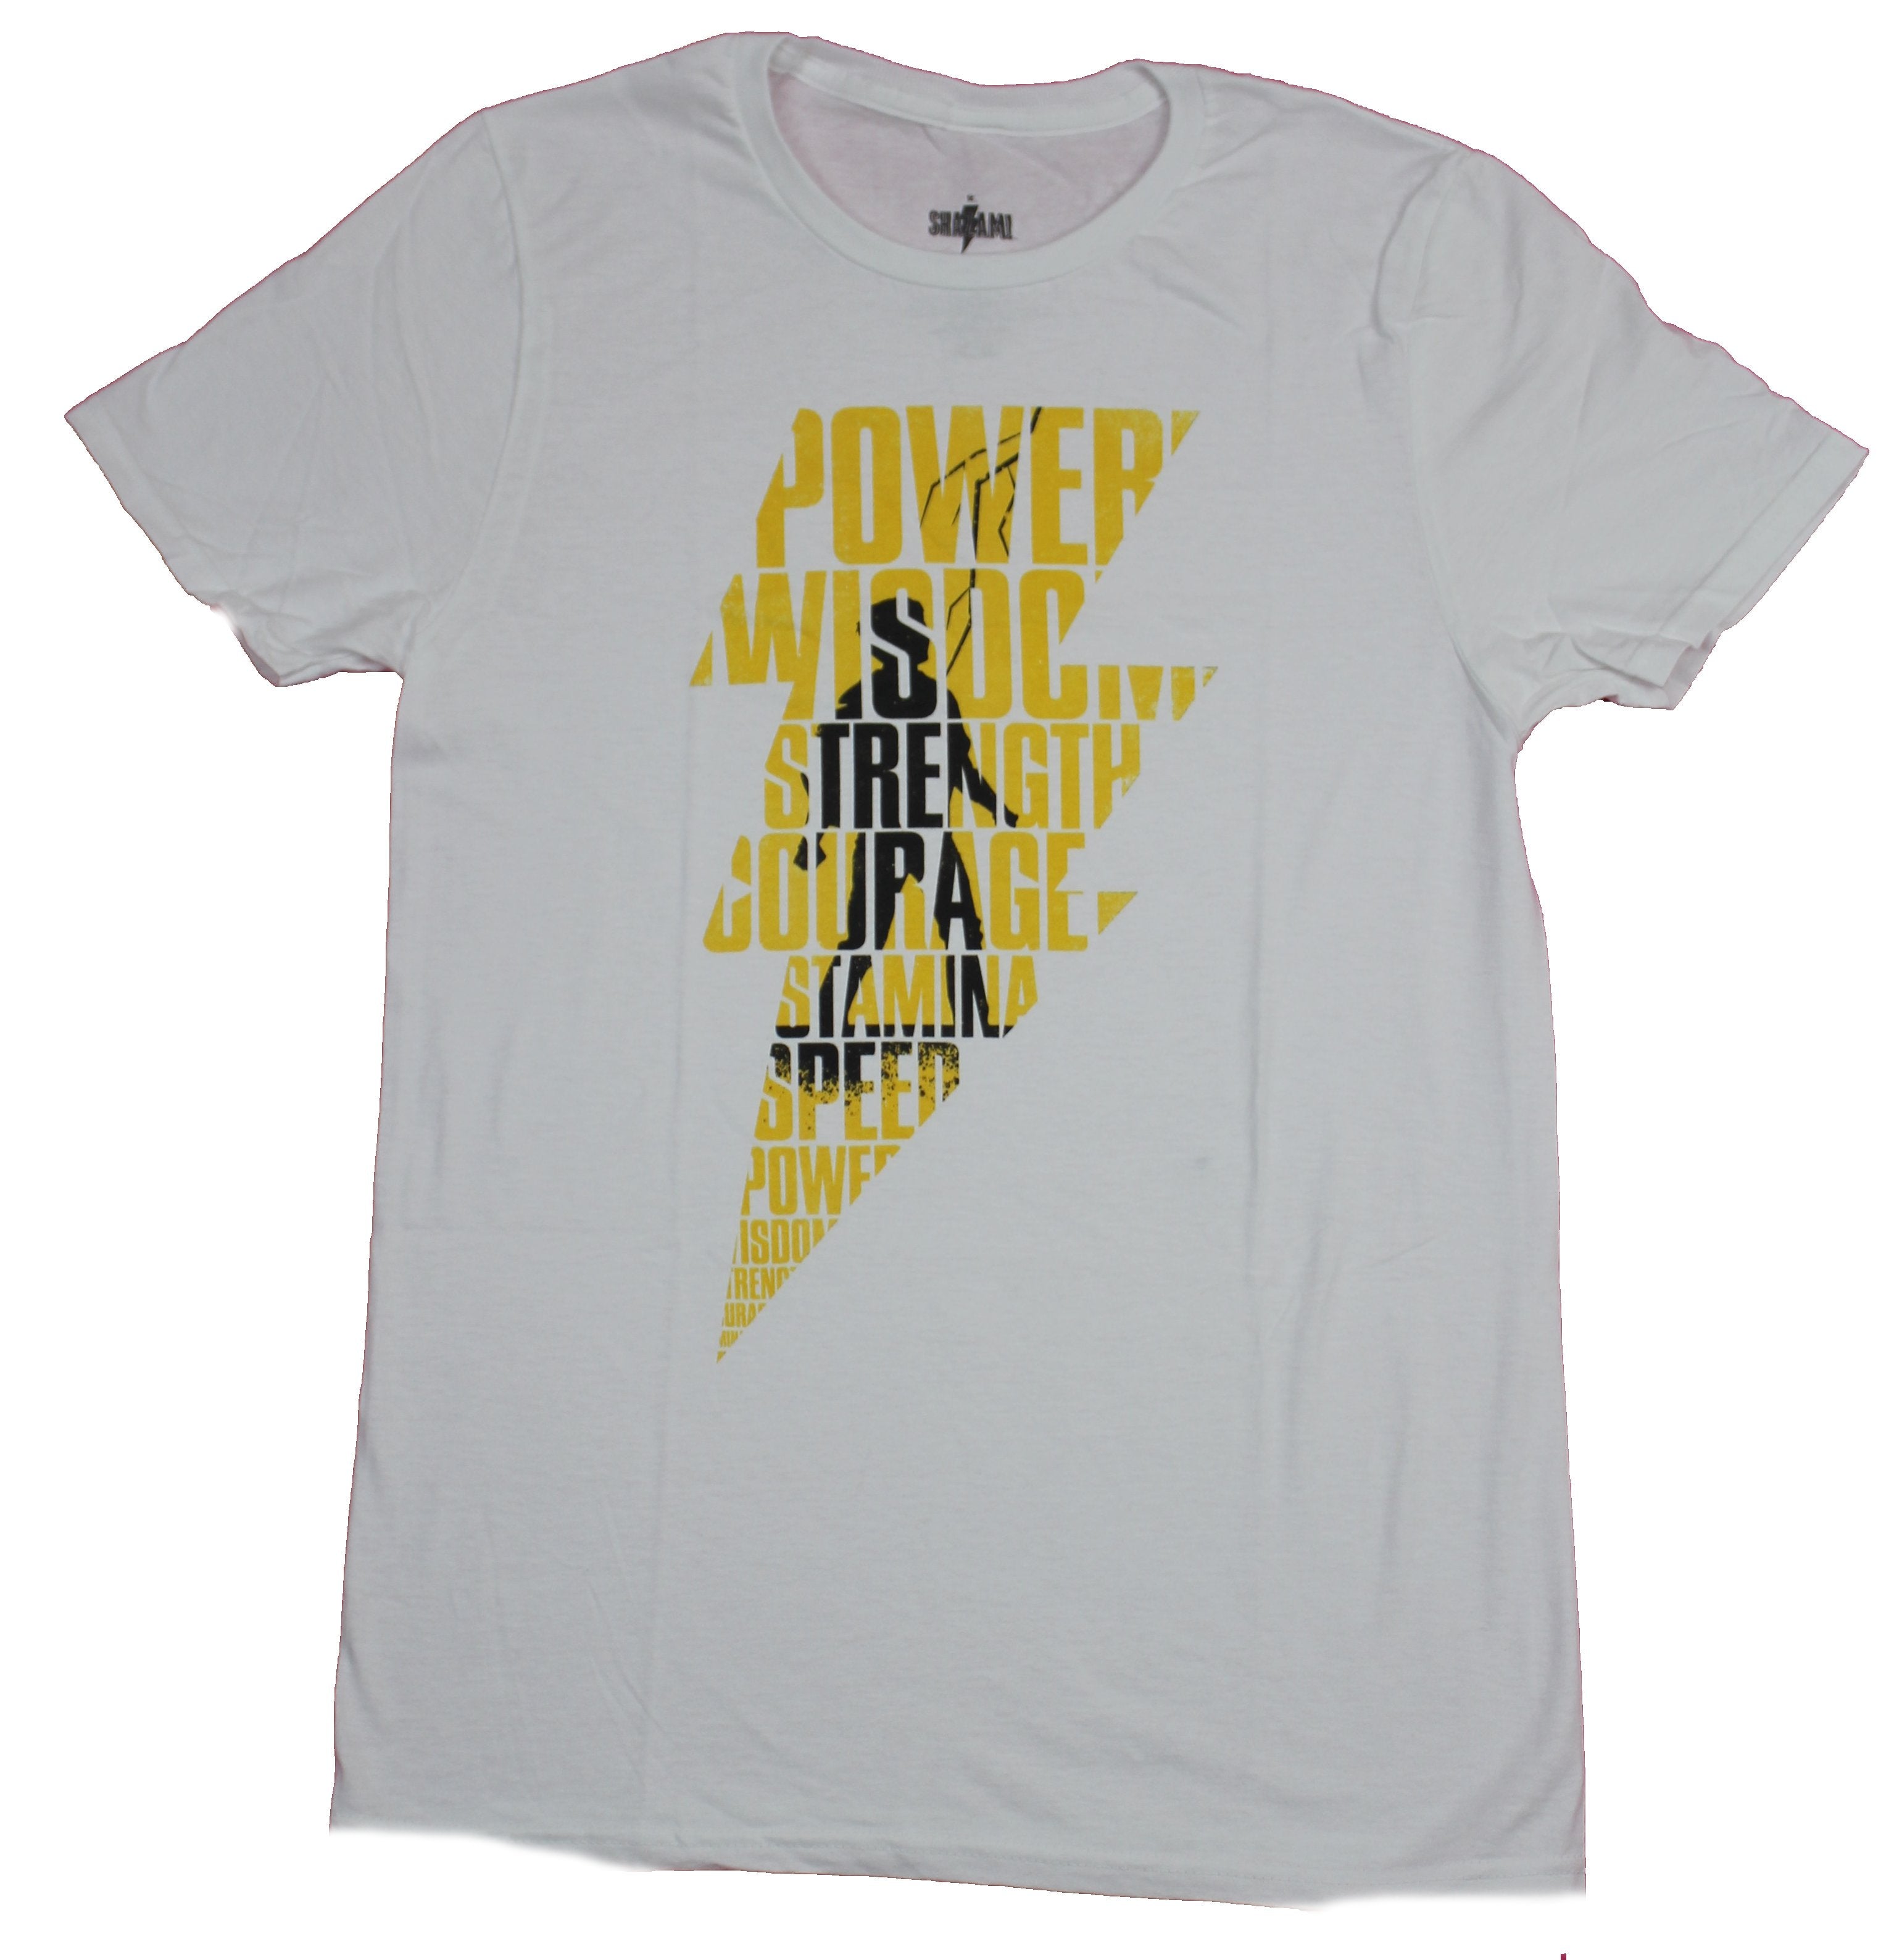 Shazam Mens T-Shirt  - Classic Bolt Filled With Billy Batson Virtues of Shazam